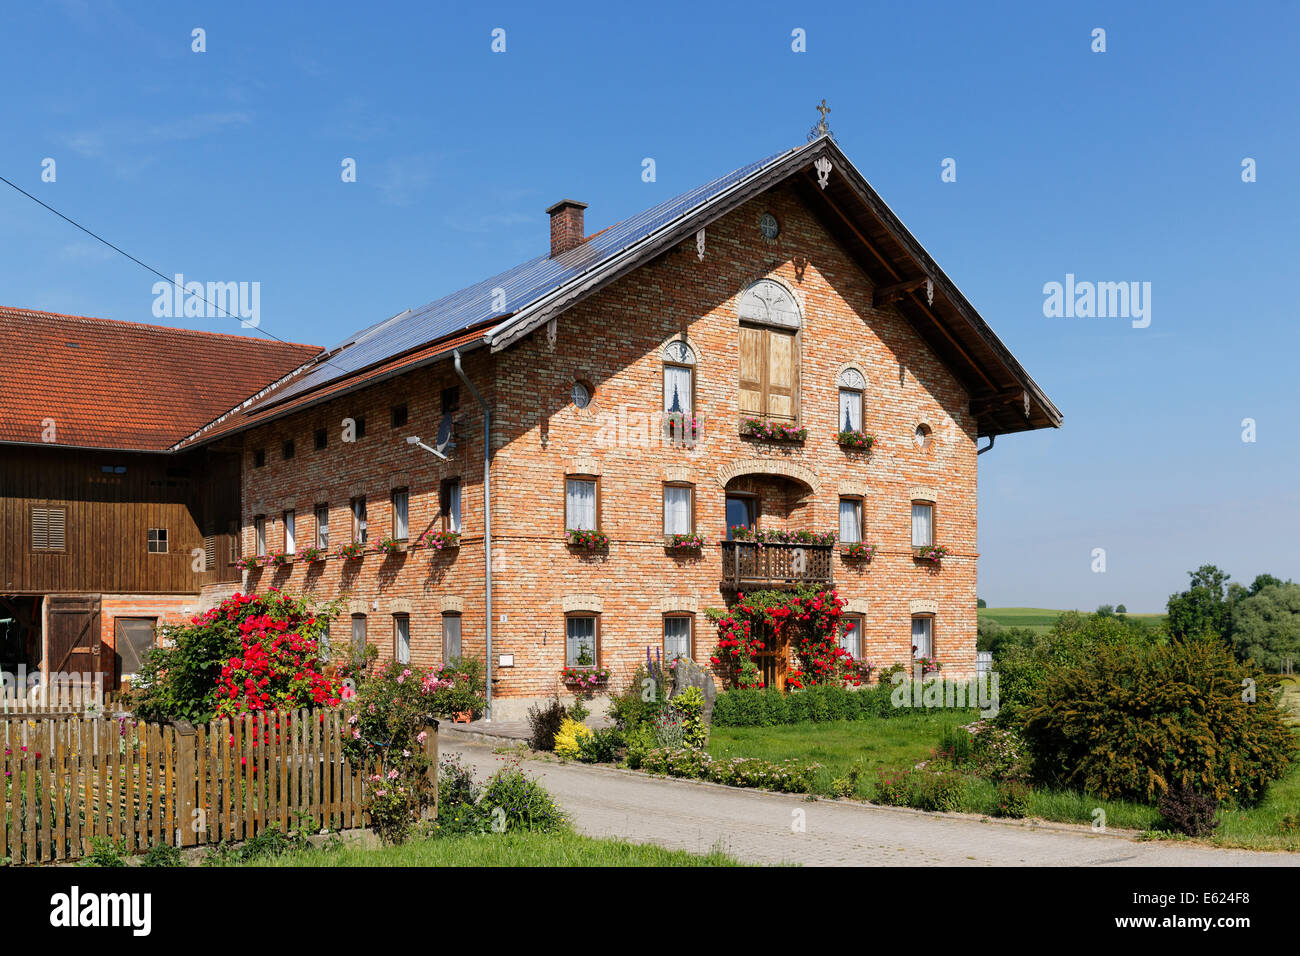 Farmhouse, Perfall, Eiselfing, Chiemgau, Upper Bavaria, Bavaria, Germany Stock Photo